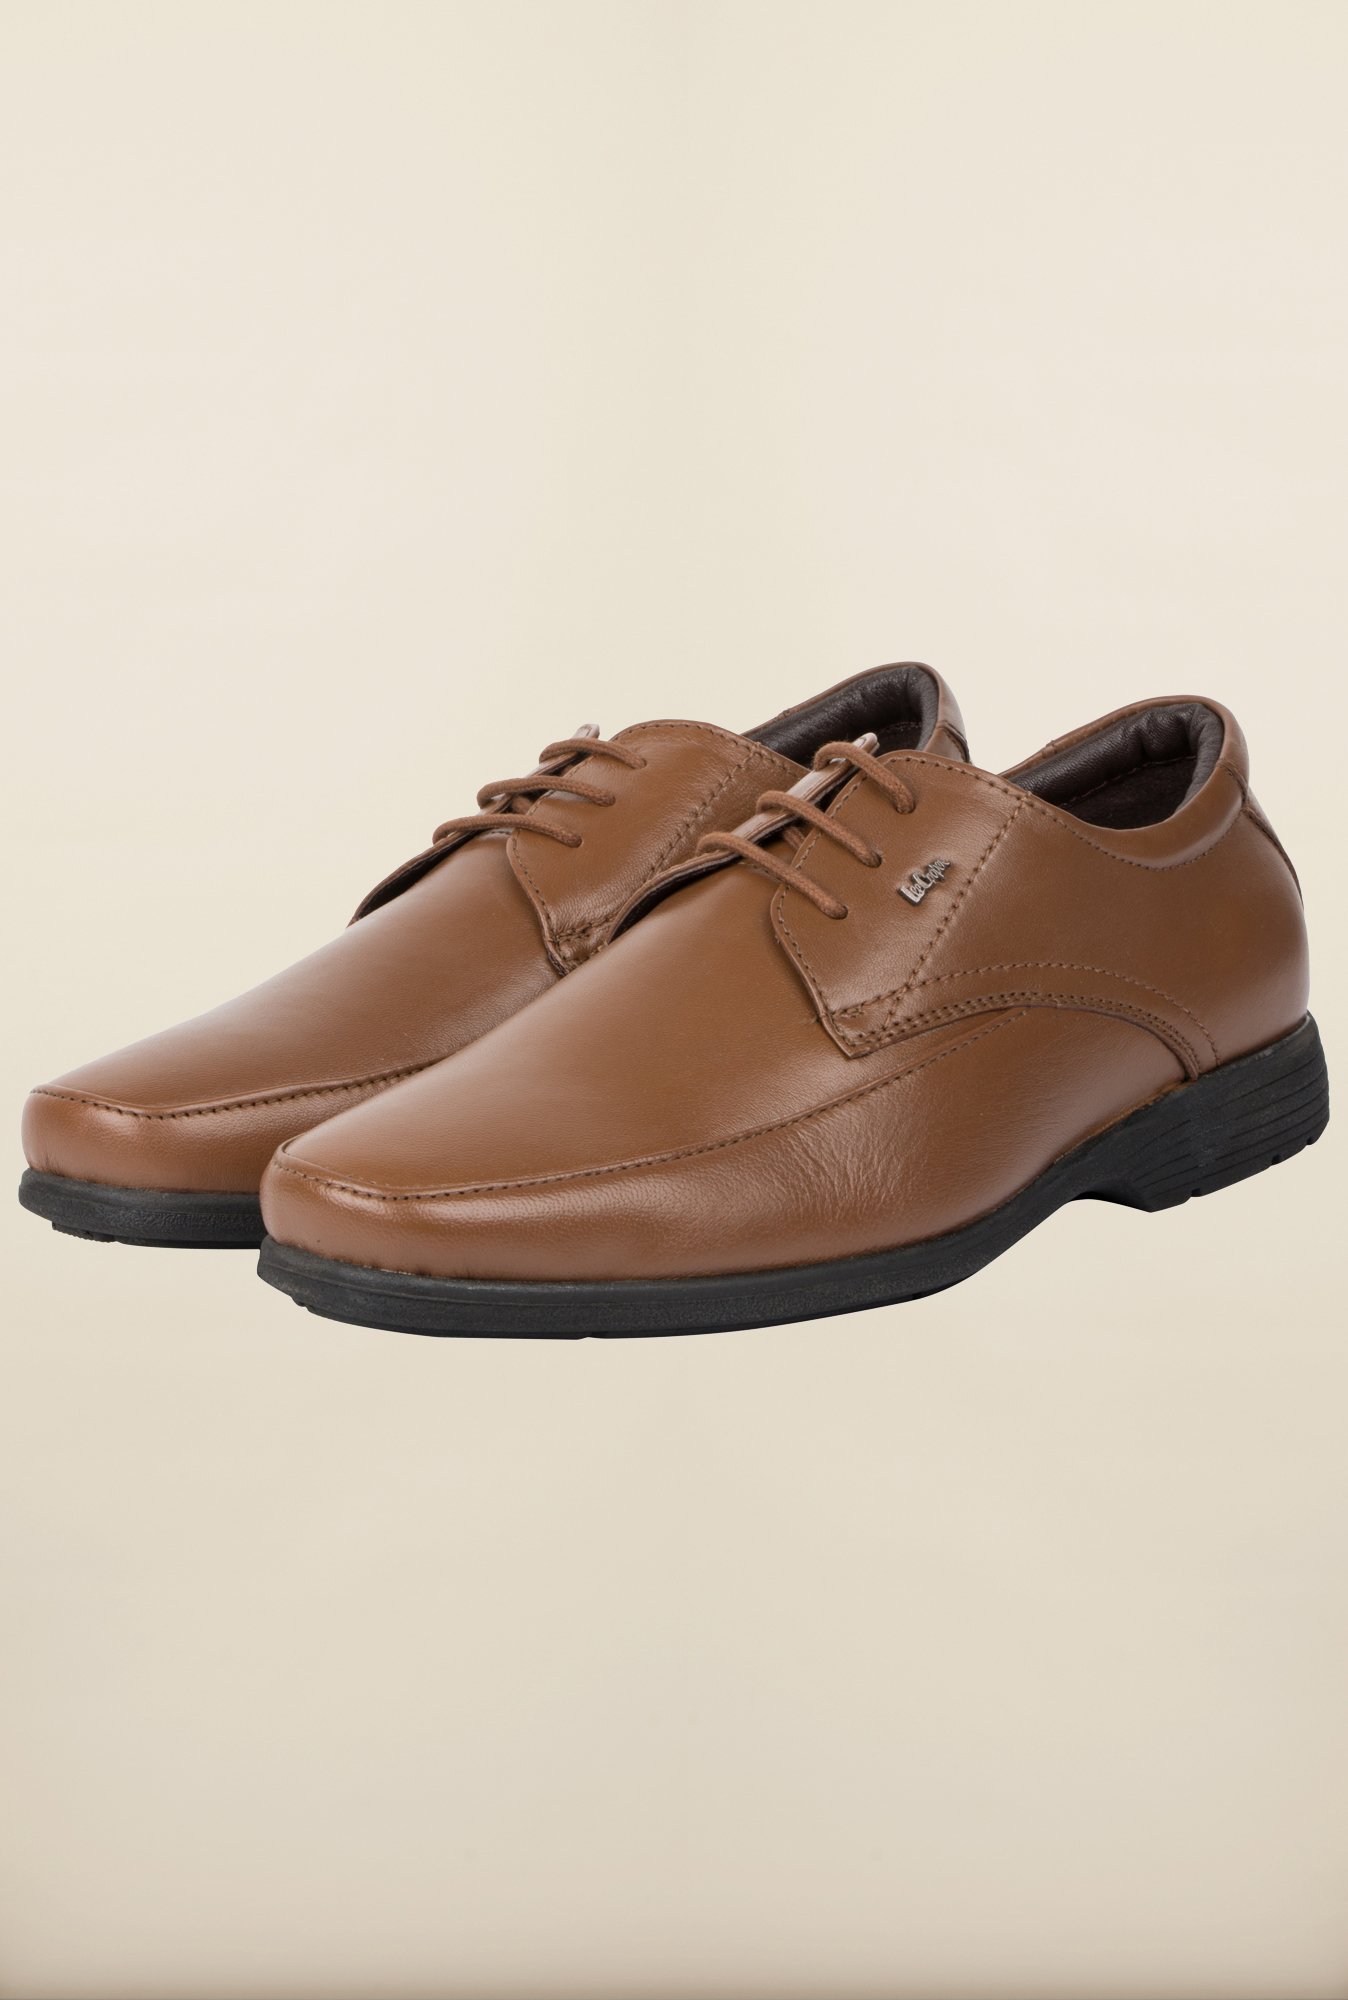 lee cooper formal shoes tan color